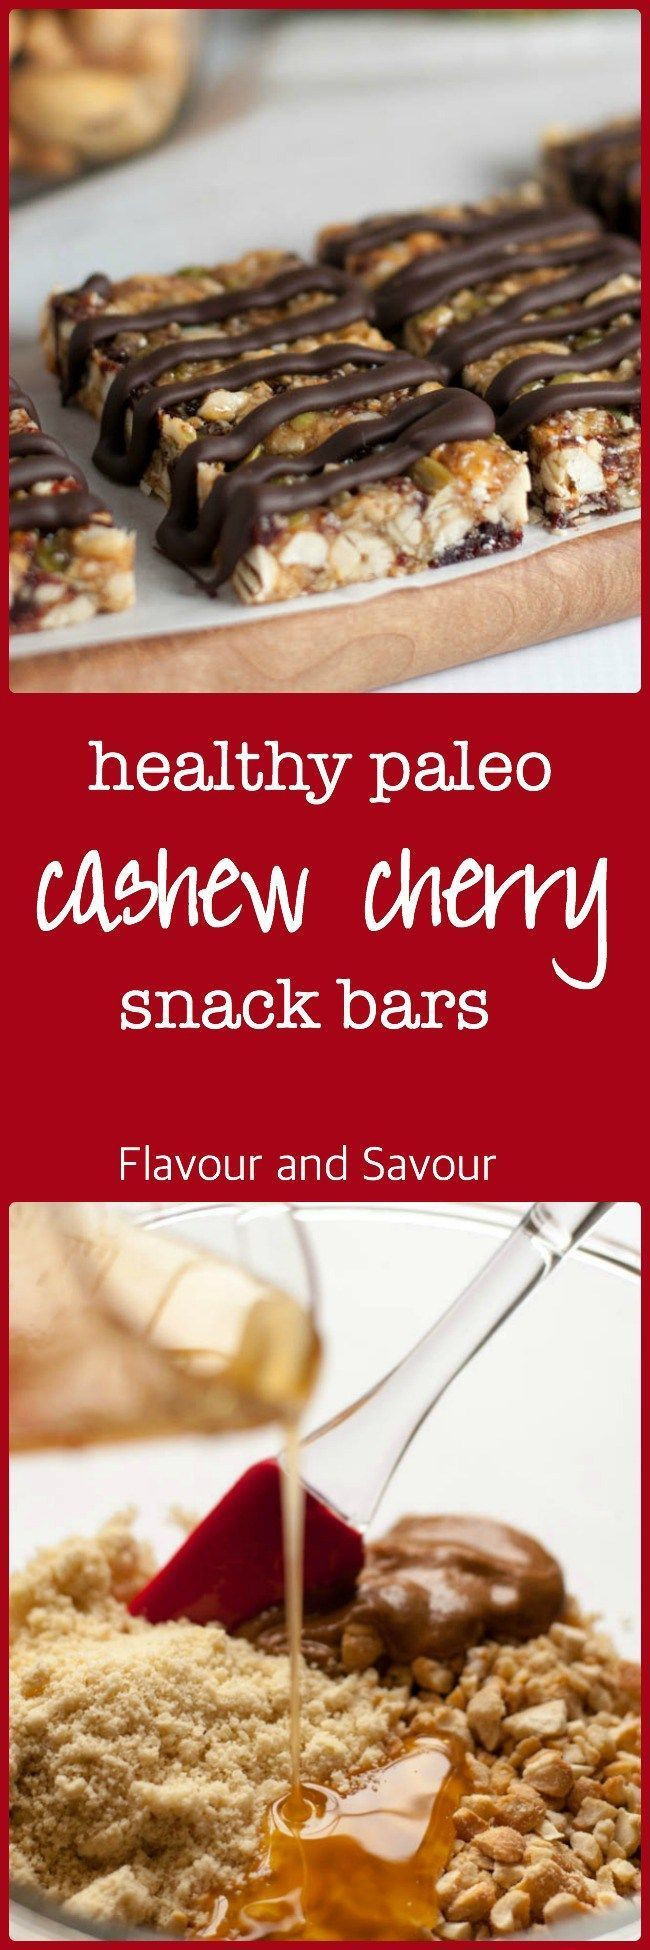 Healthy Paleo Snacks
 Healthy Paleo Cashew Cherry Snack Bars Recipe